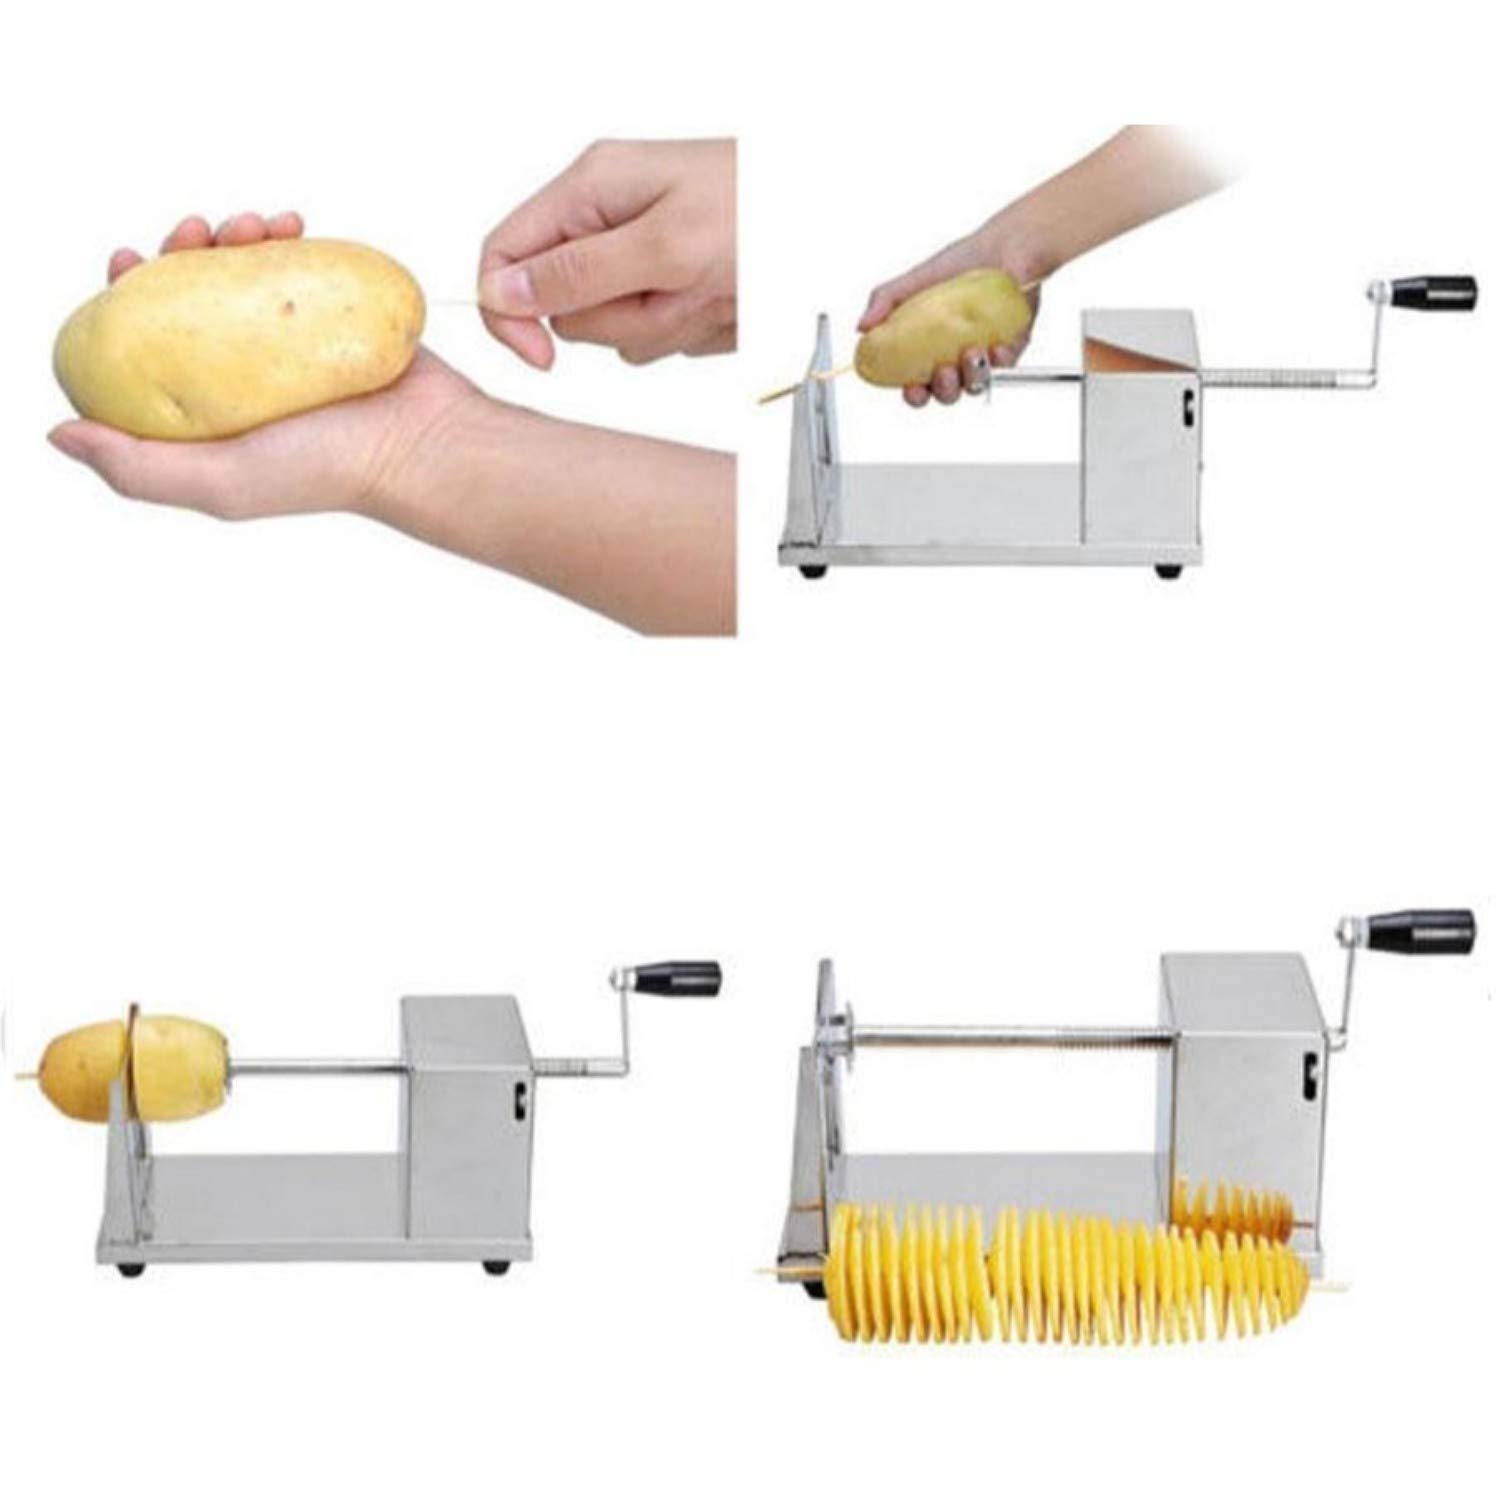 Potato Cutter,Tornado Spiral Potato Cutter Manual Stainless Steel Potato  Cutter Spiral Cutting Machine Kitchen Accessories Cooking Tools